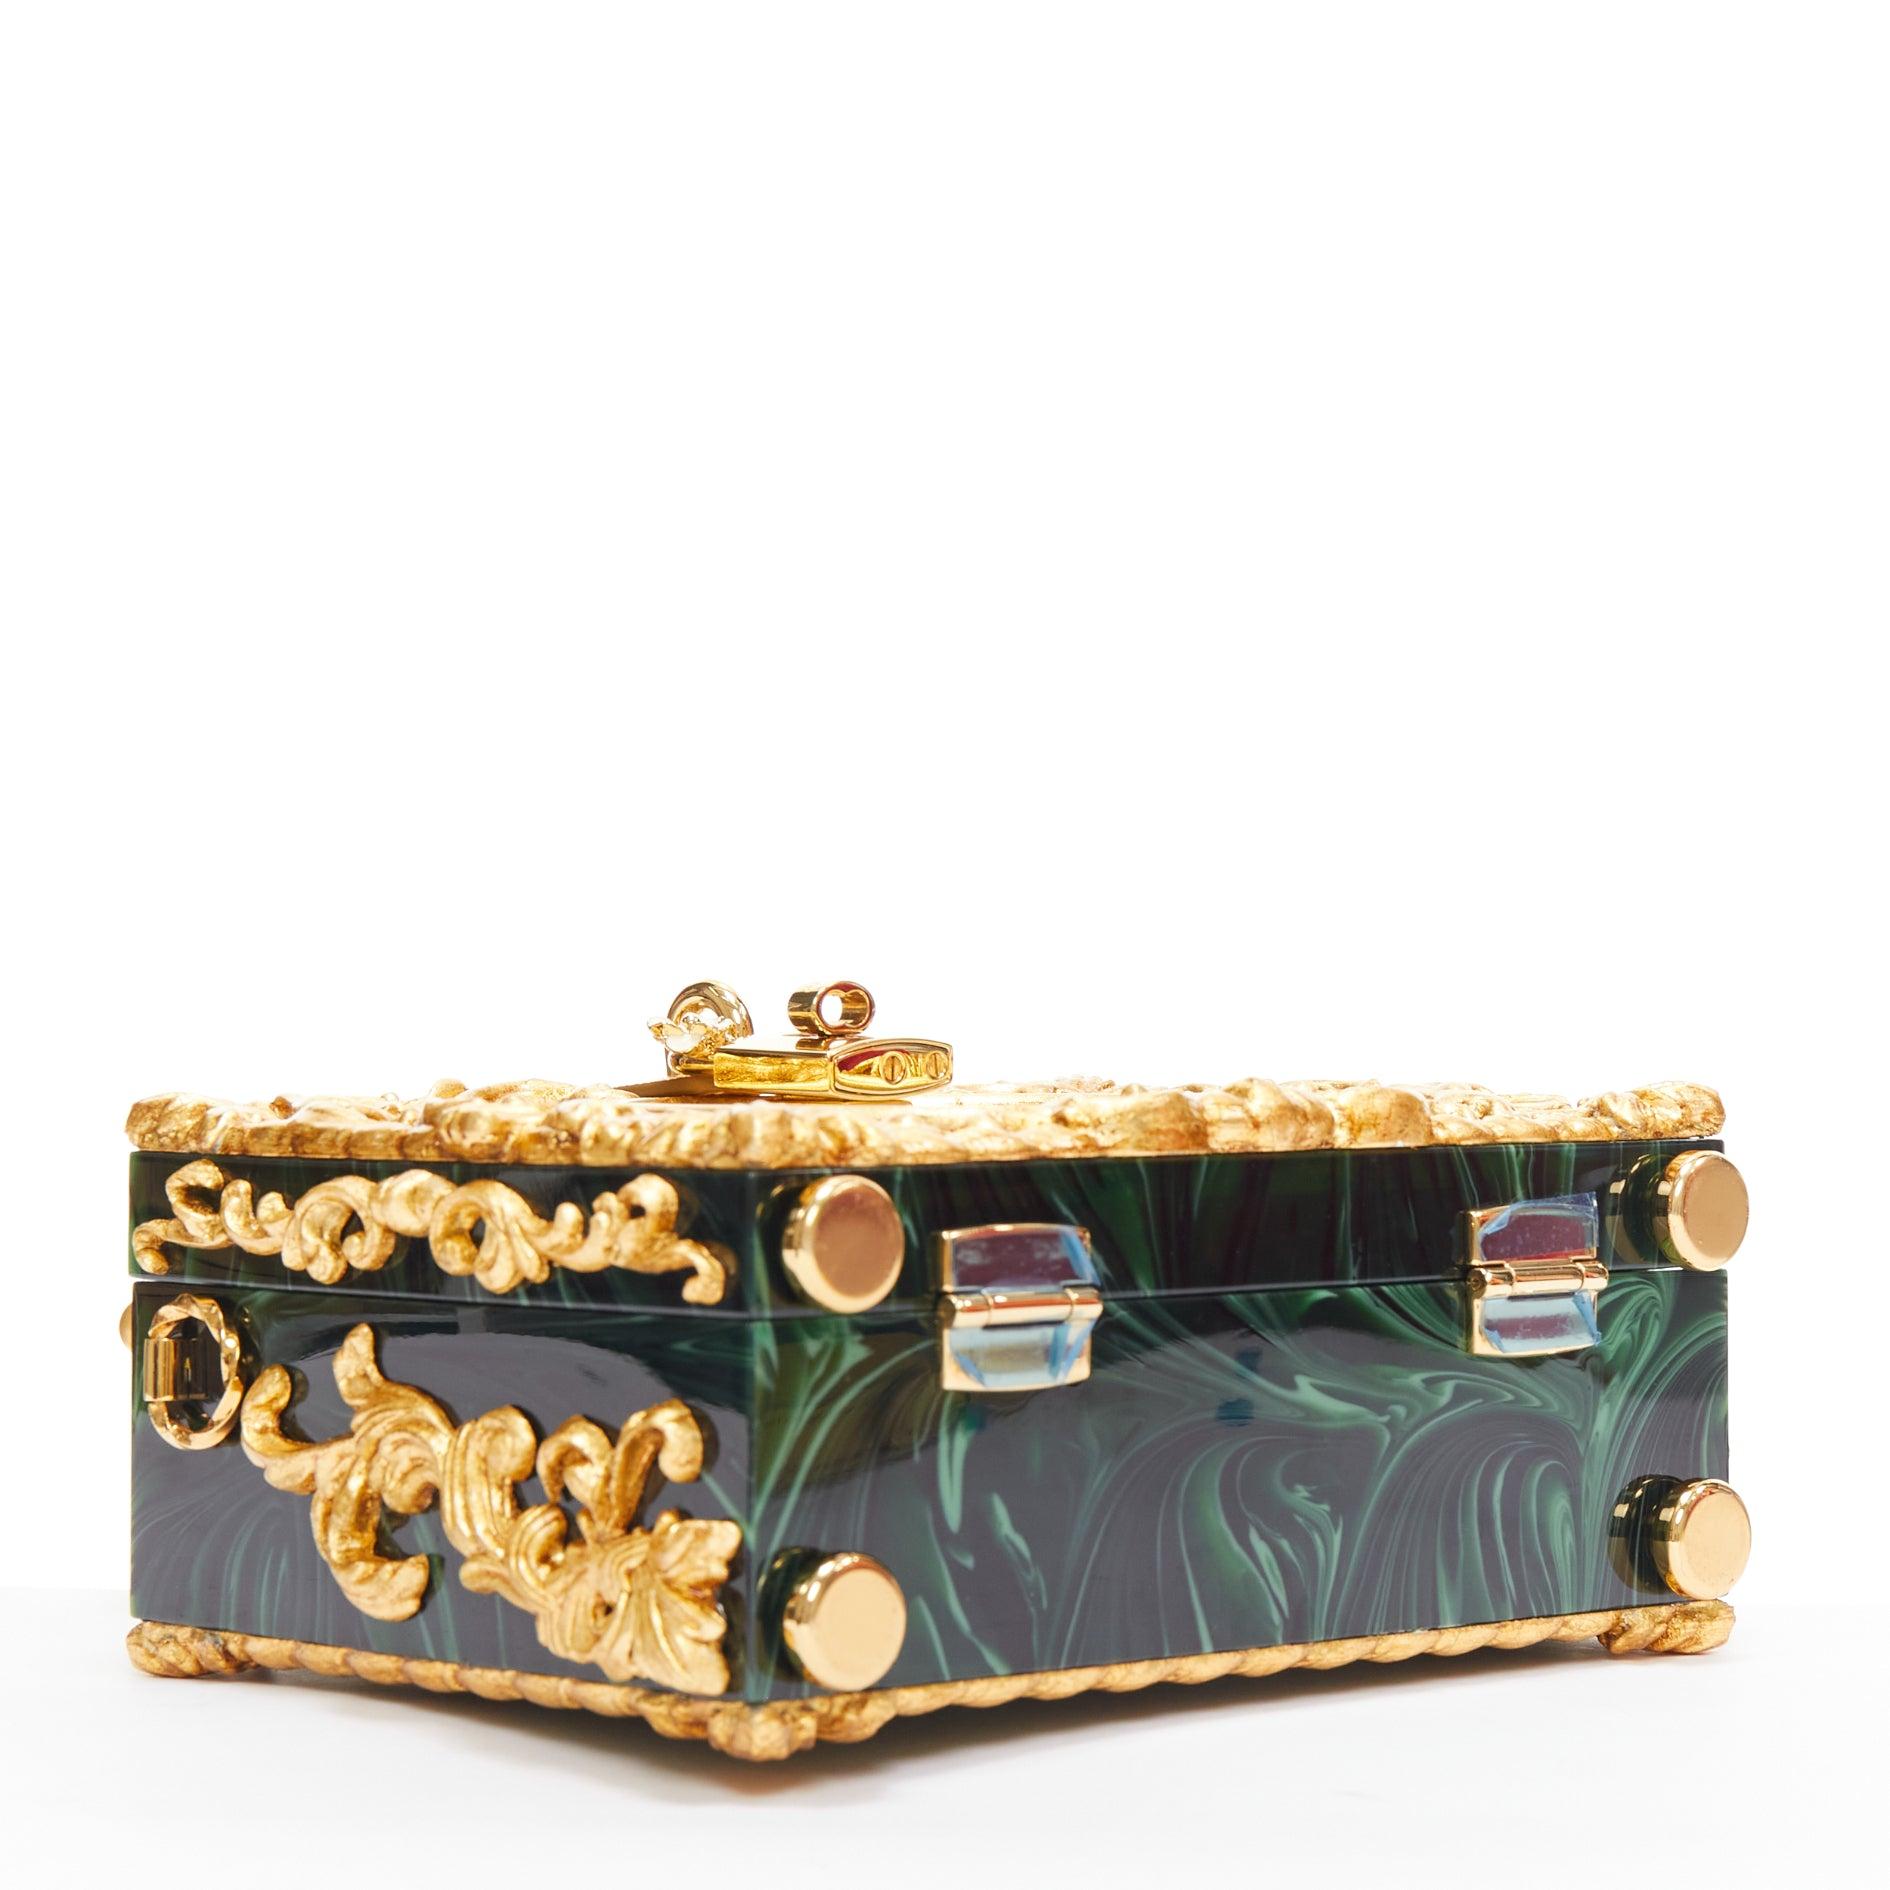 selten DOLCE GABBANA Box Orologio Barocco Gold Metall grün Marmor Harz Kosmetiktasche im Angebot 2